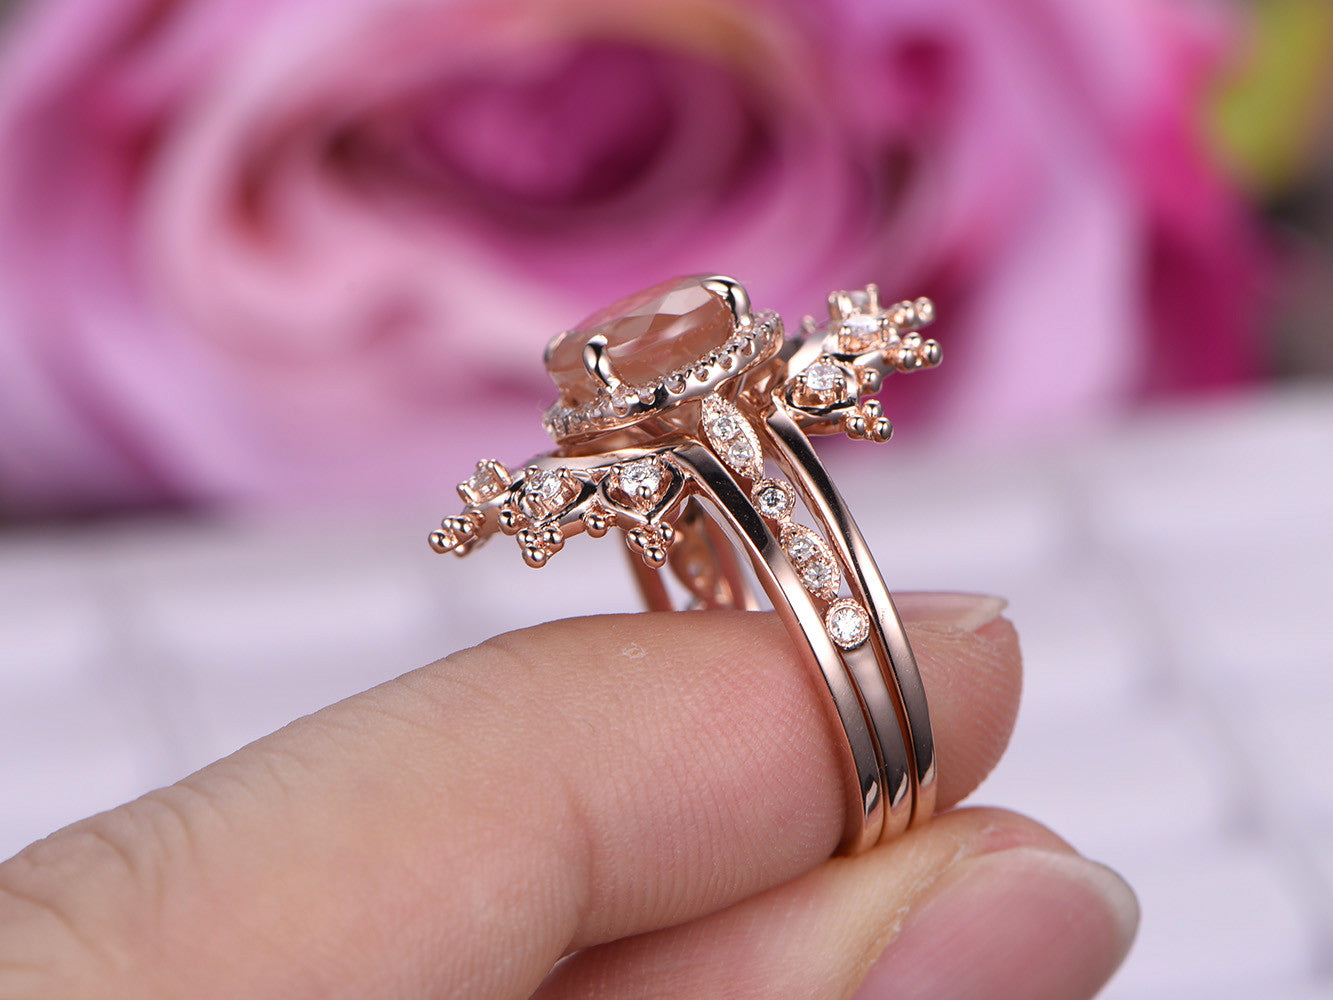 Reserved for Fdark: Matching Tiara Bands for Round Sunstone Engagement Ring, Moissanite Tiara Wedding 14K Rose Gold